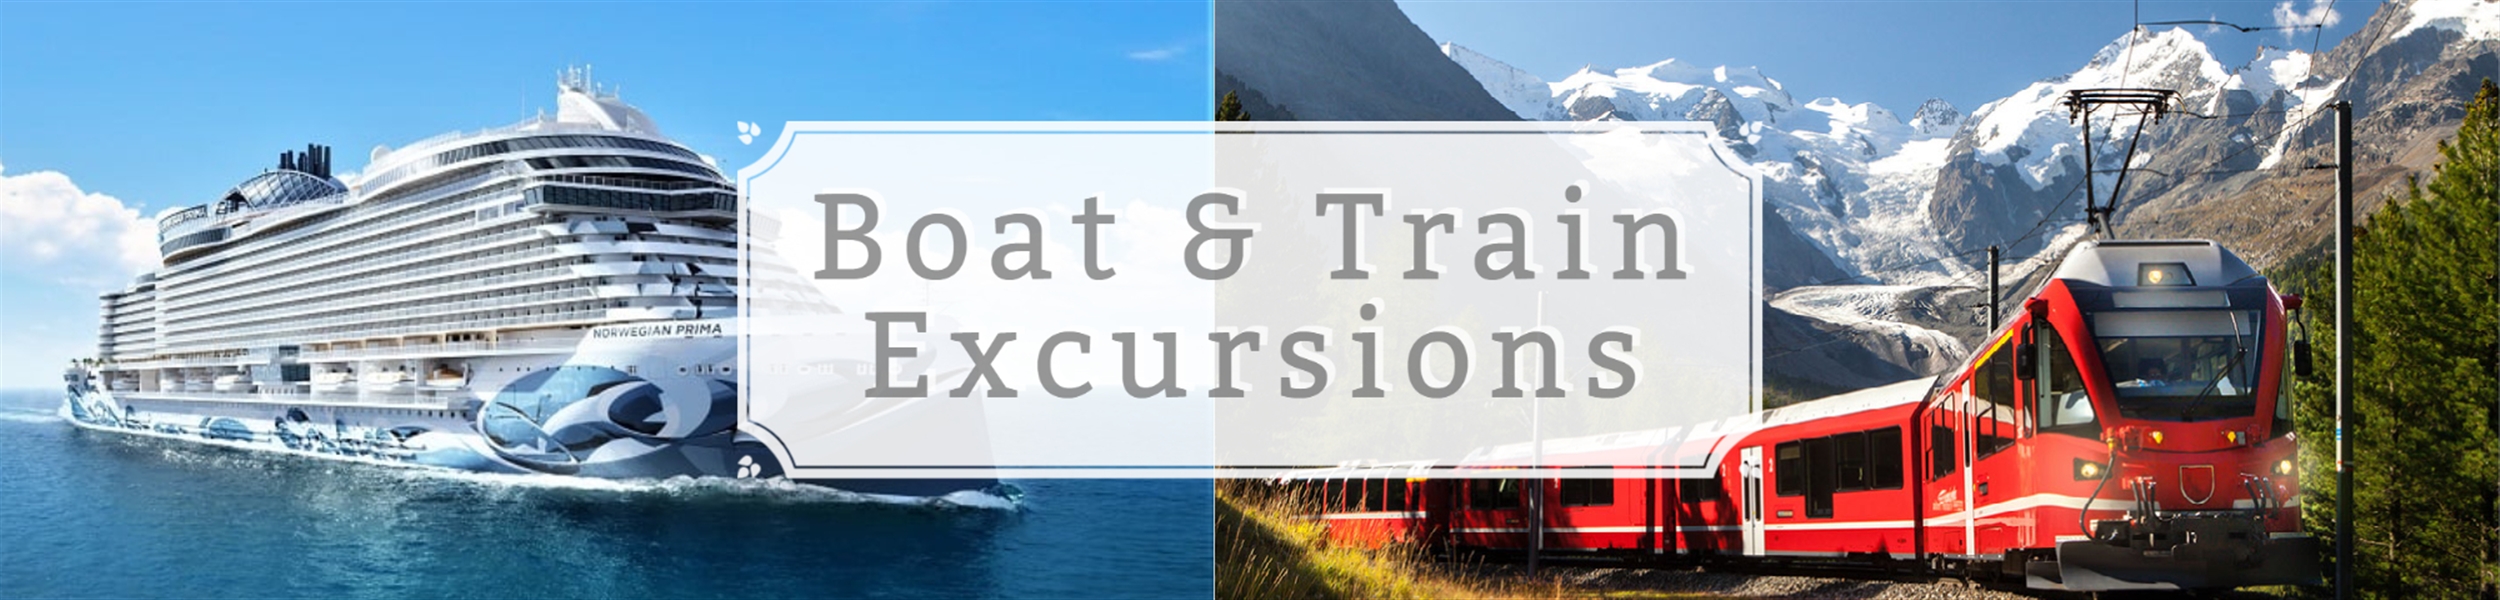 boat train excursions2.jpg